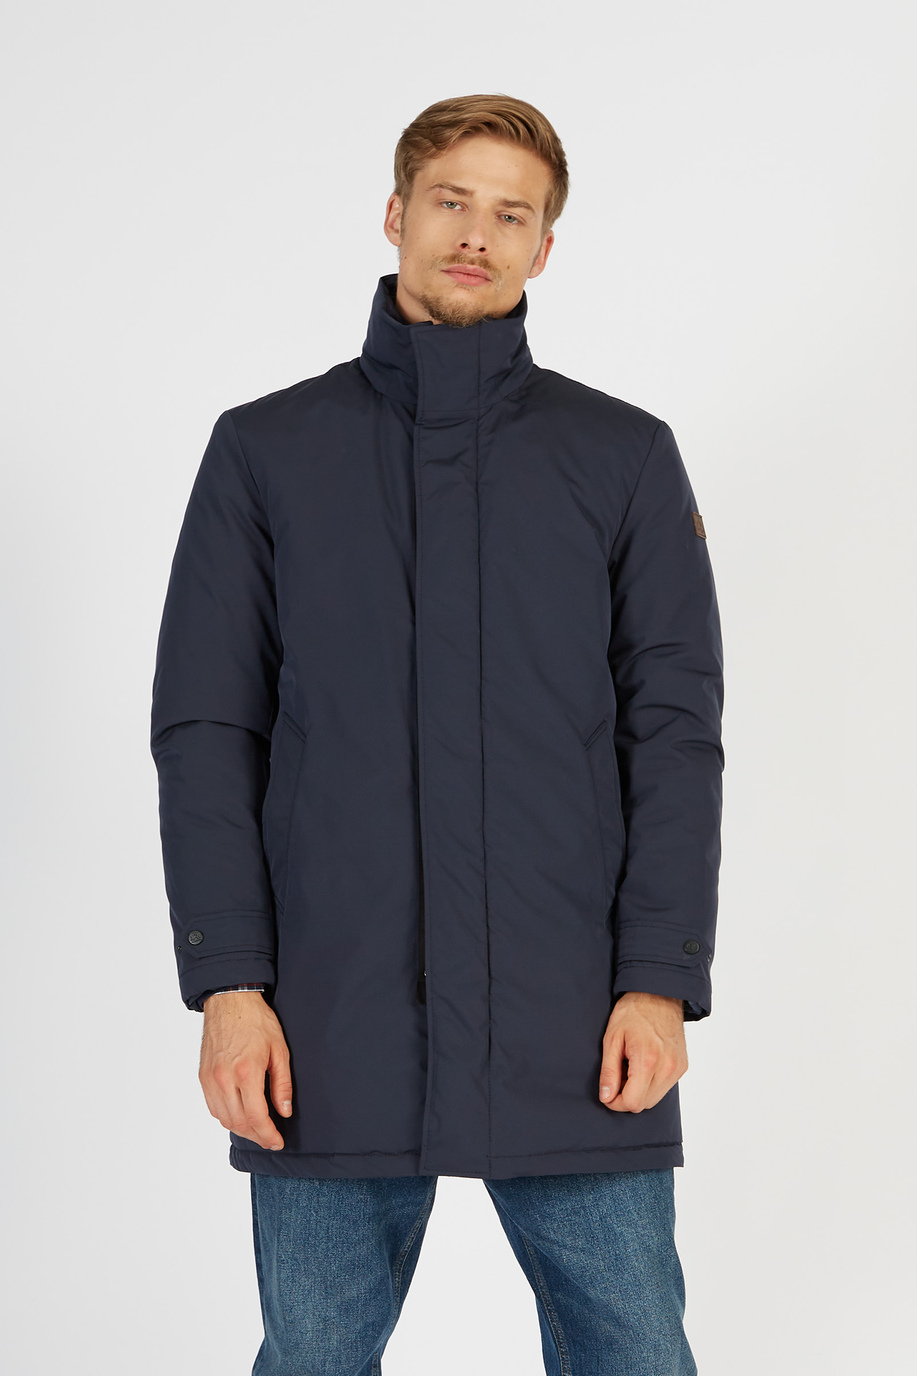 Herren Blue Ribbon Jacke aus Nylon mit normaler Passform - Oberbekleidung | La Martina - Official Online Shop